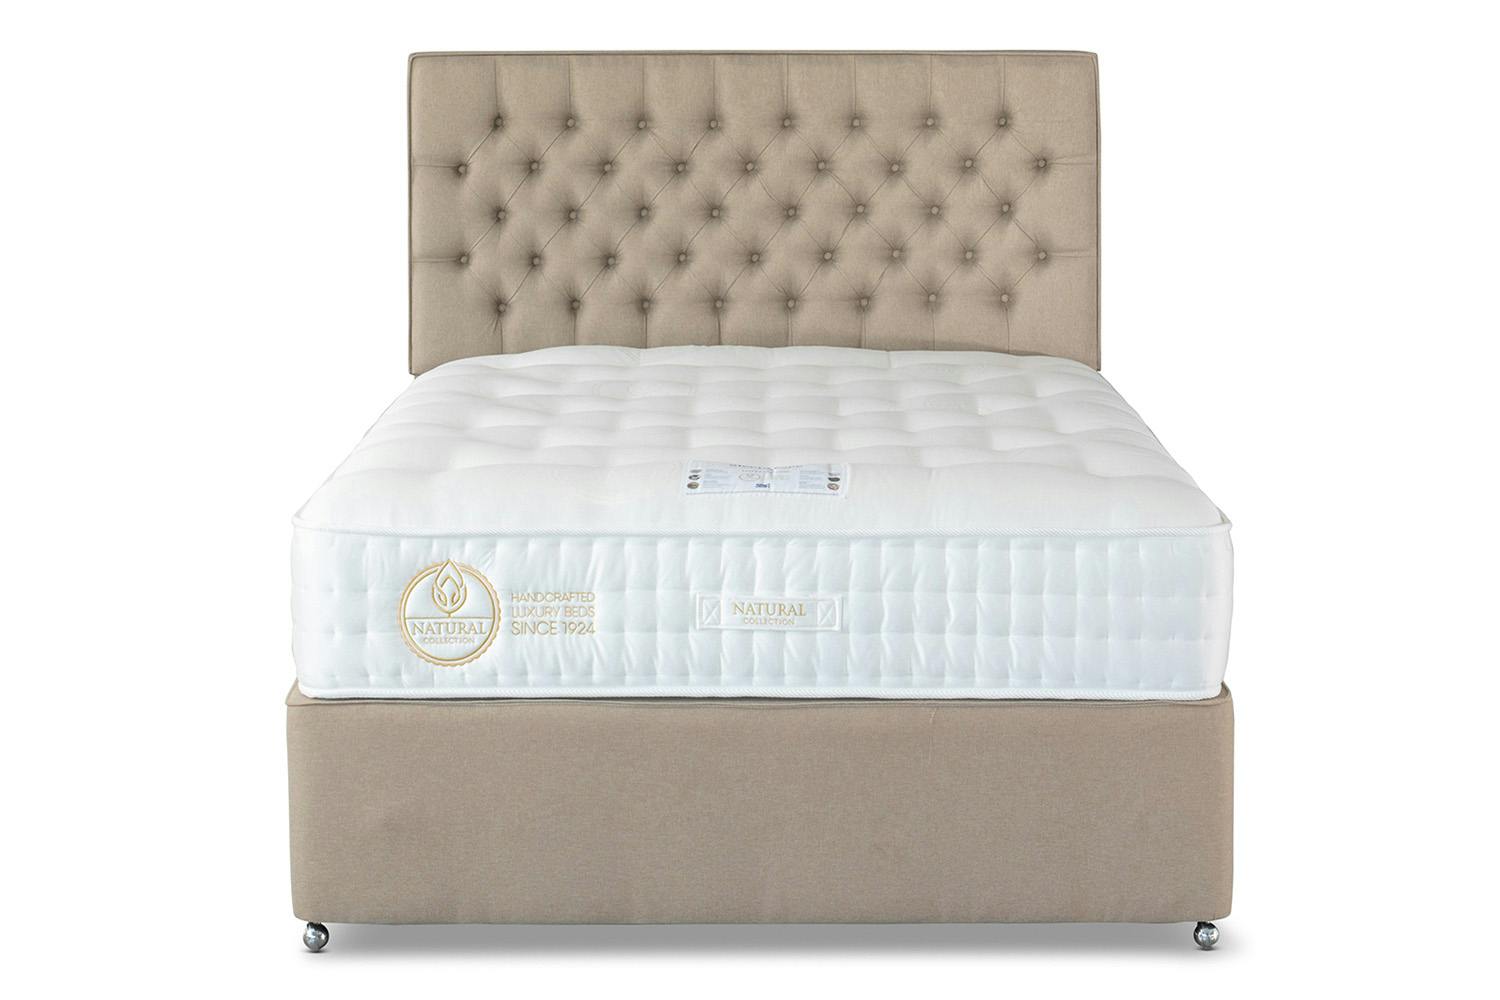 imperial innovations queen mattress